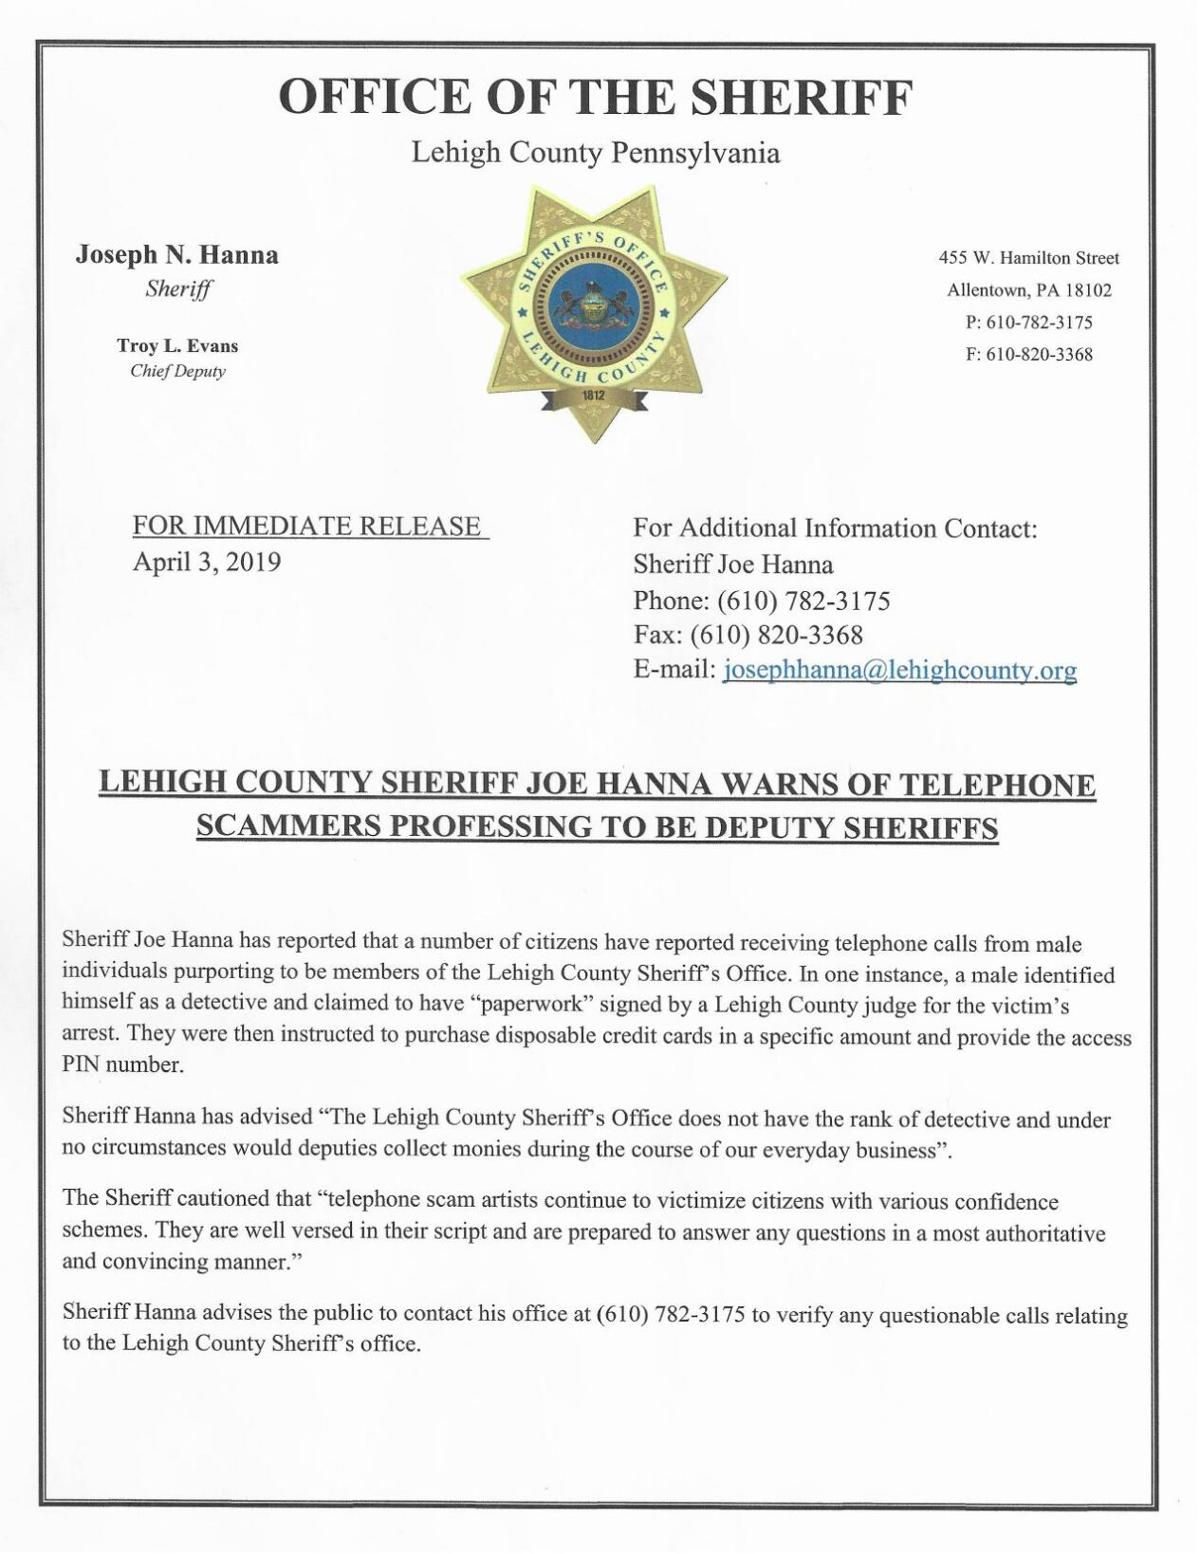 Lehigh County Sheriff Joe Hanna's warning about telephone scams